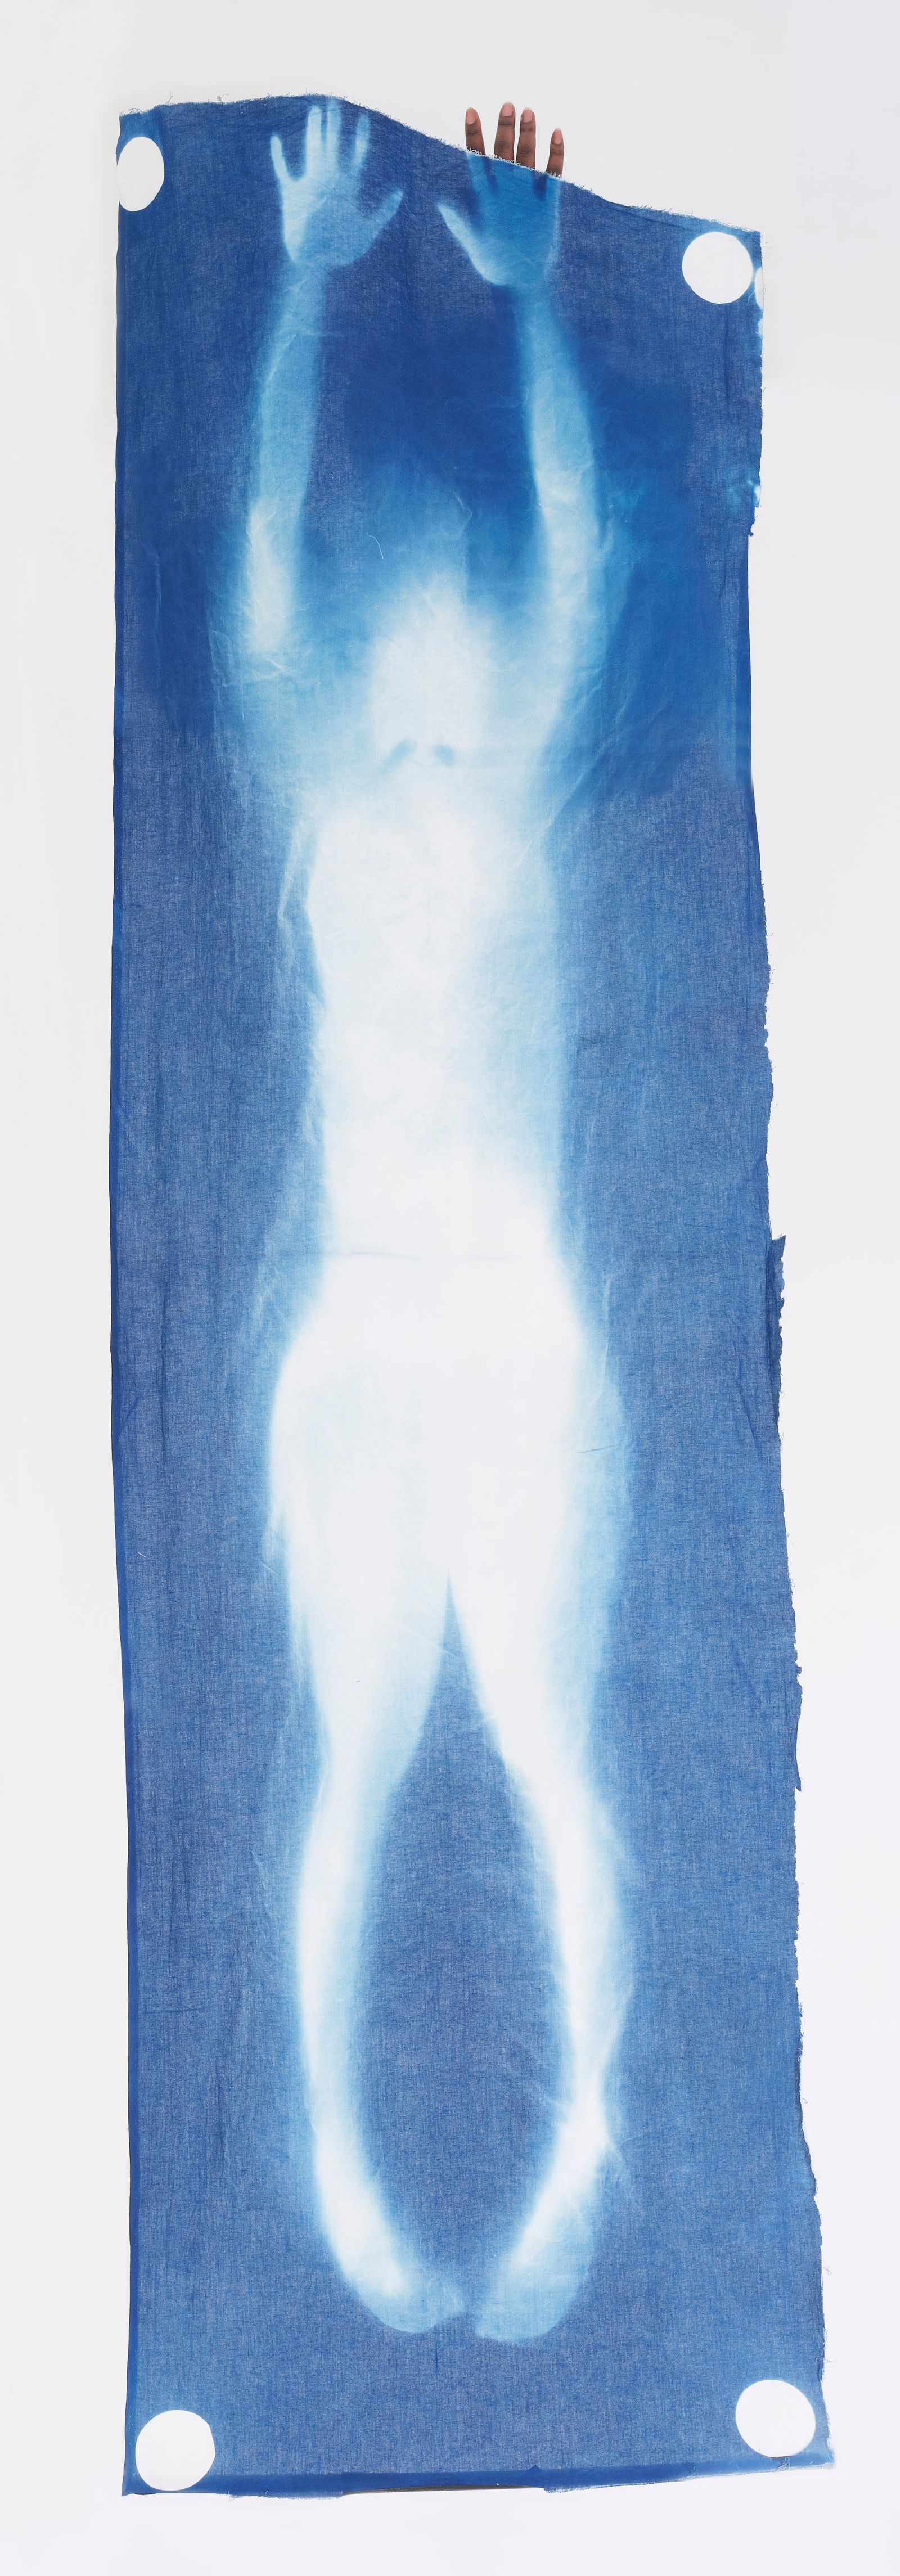 © Melanie Issaka - Blueprint 4: Hands Up — In-camera Cyanotype collage, Giclée print, 143x50cm, 2021